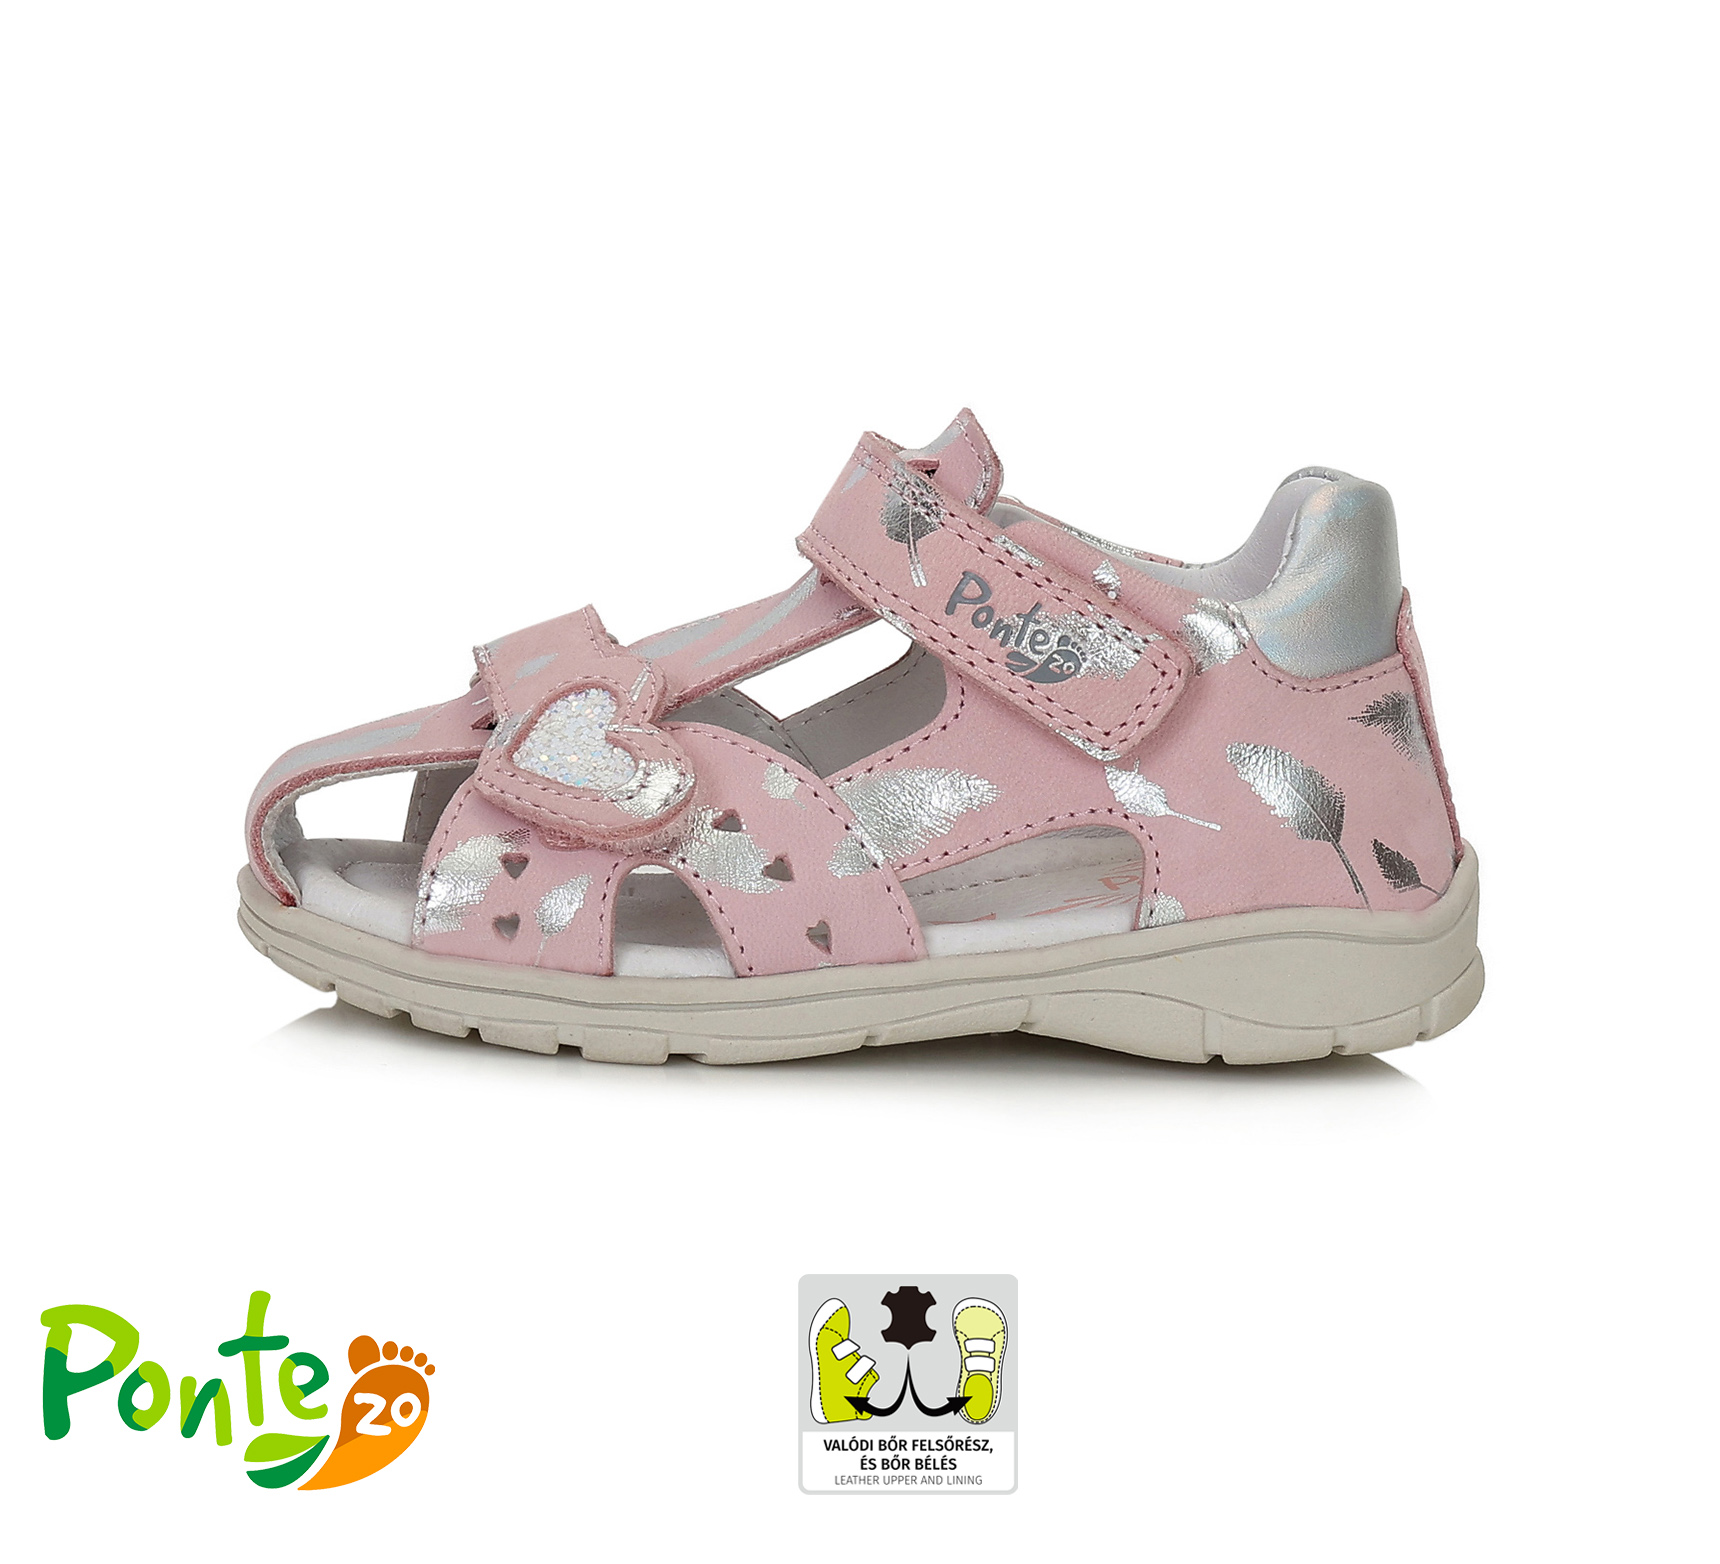 PONTE 20 dívčí kožené sandálky Pink/silver DA05-4-1949 Velikost: 26